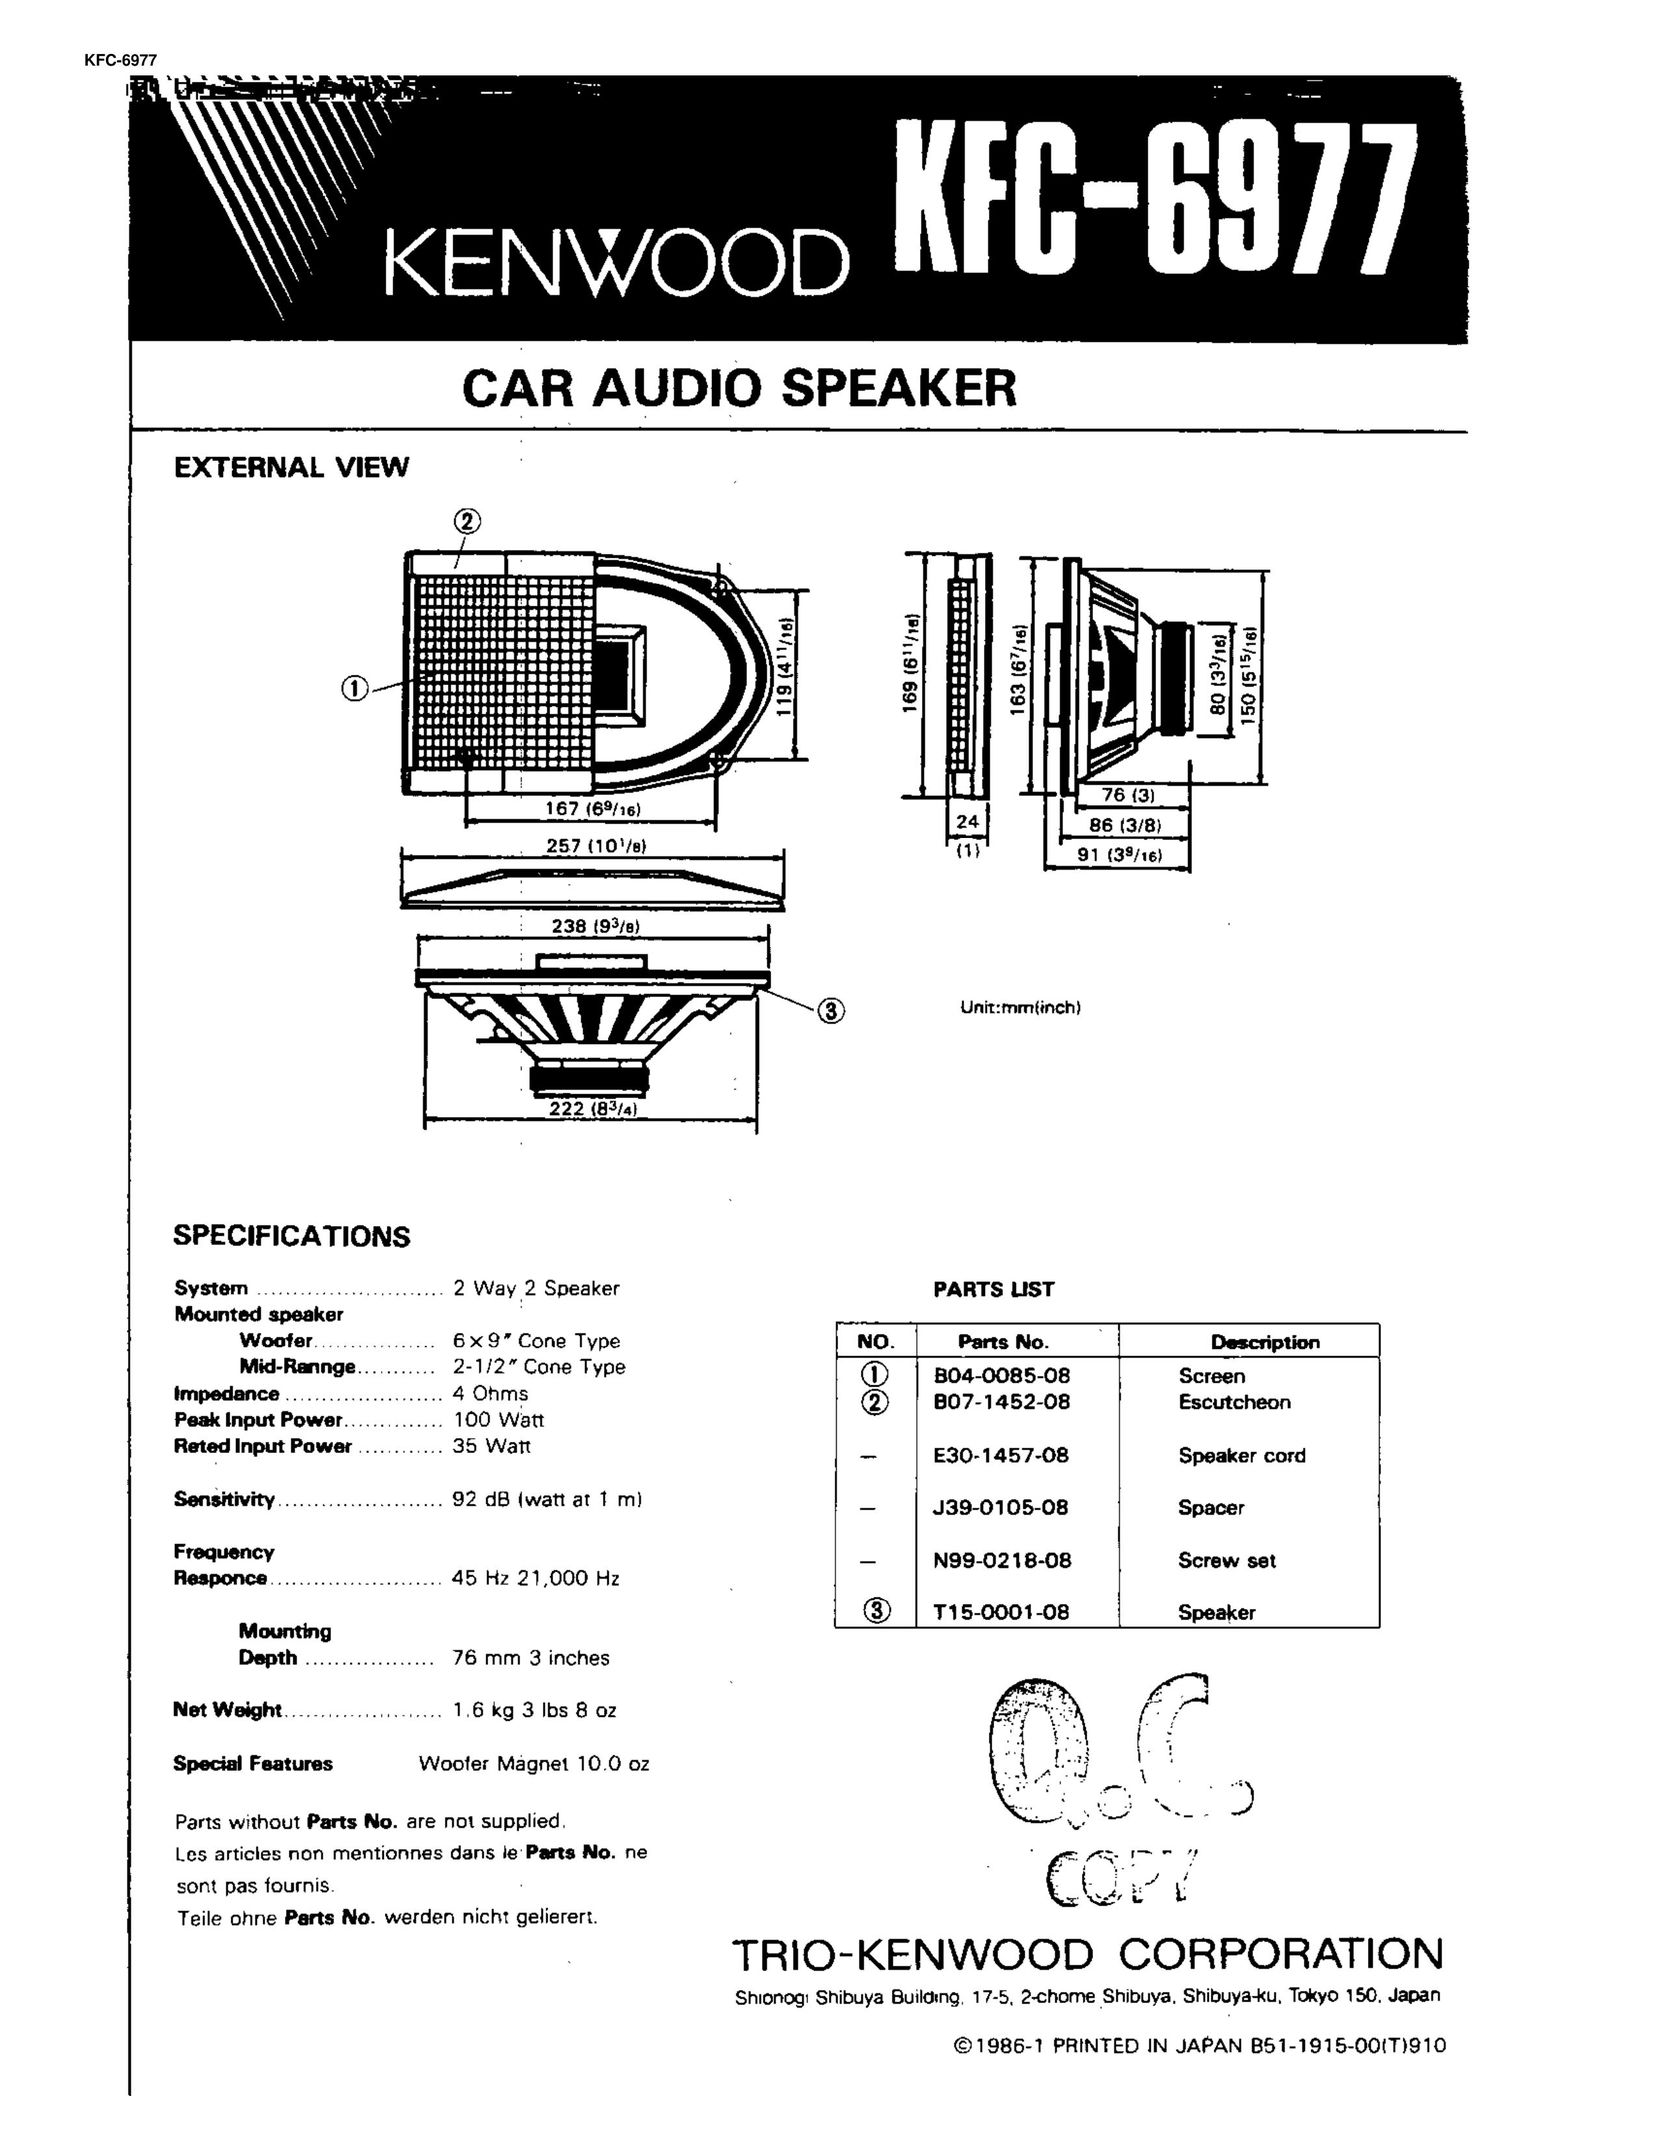 Kenwood KFC-6977 Speaker User Manual